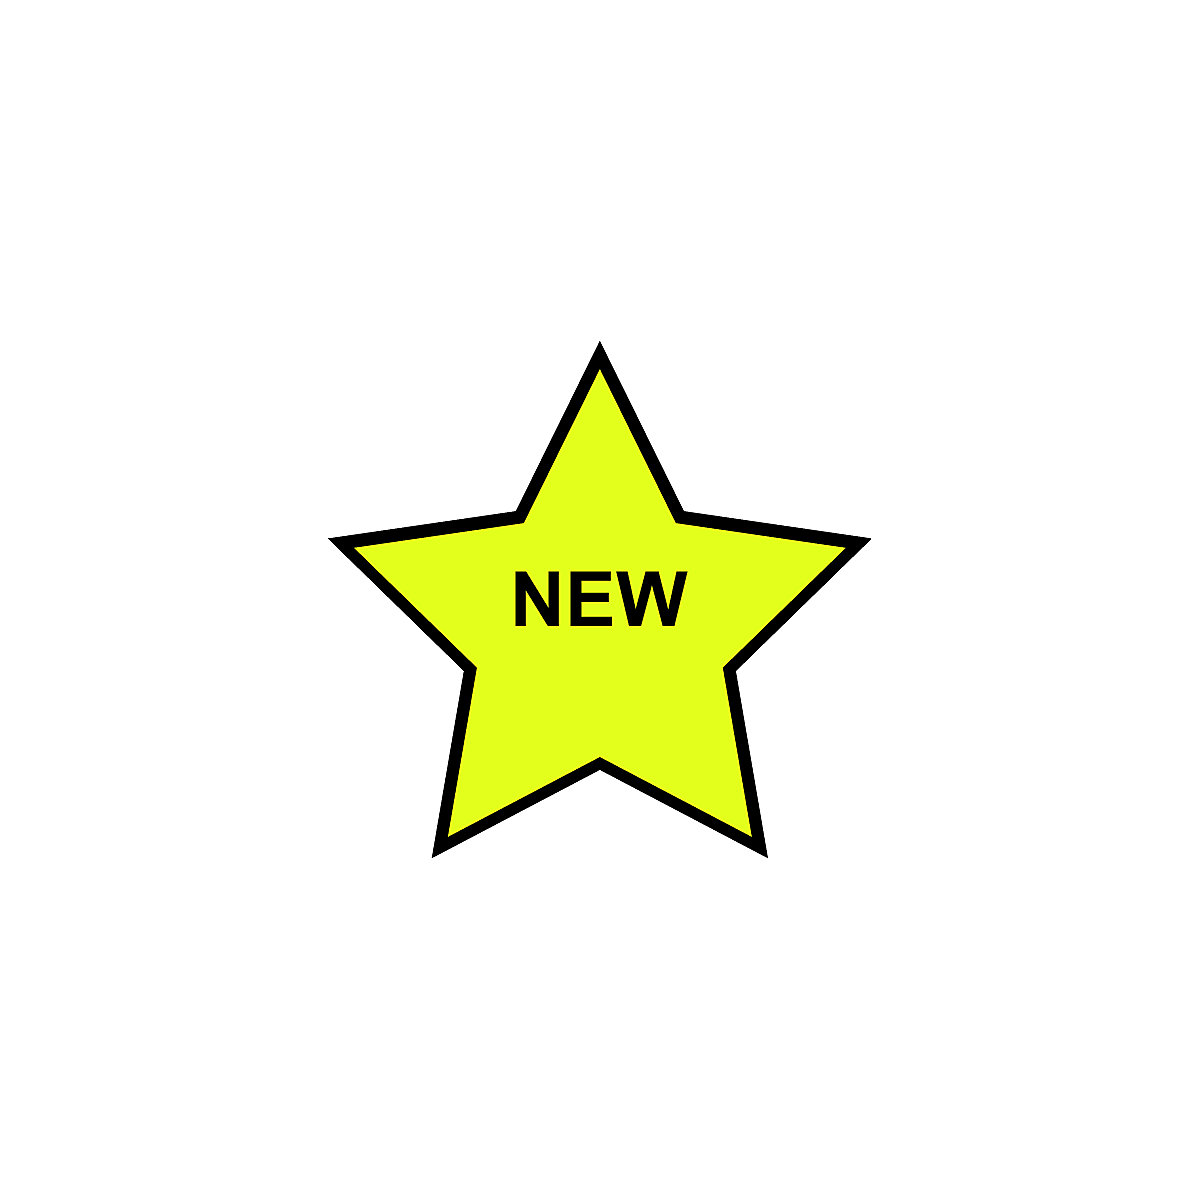 Magnetic NEW STAR symbol